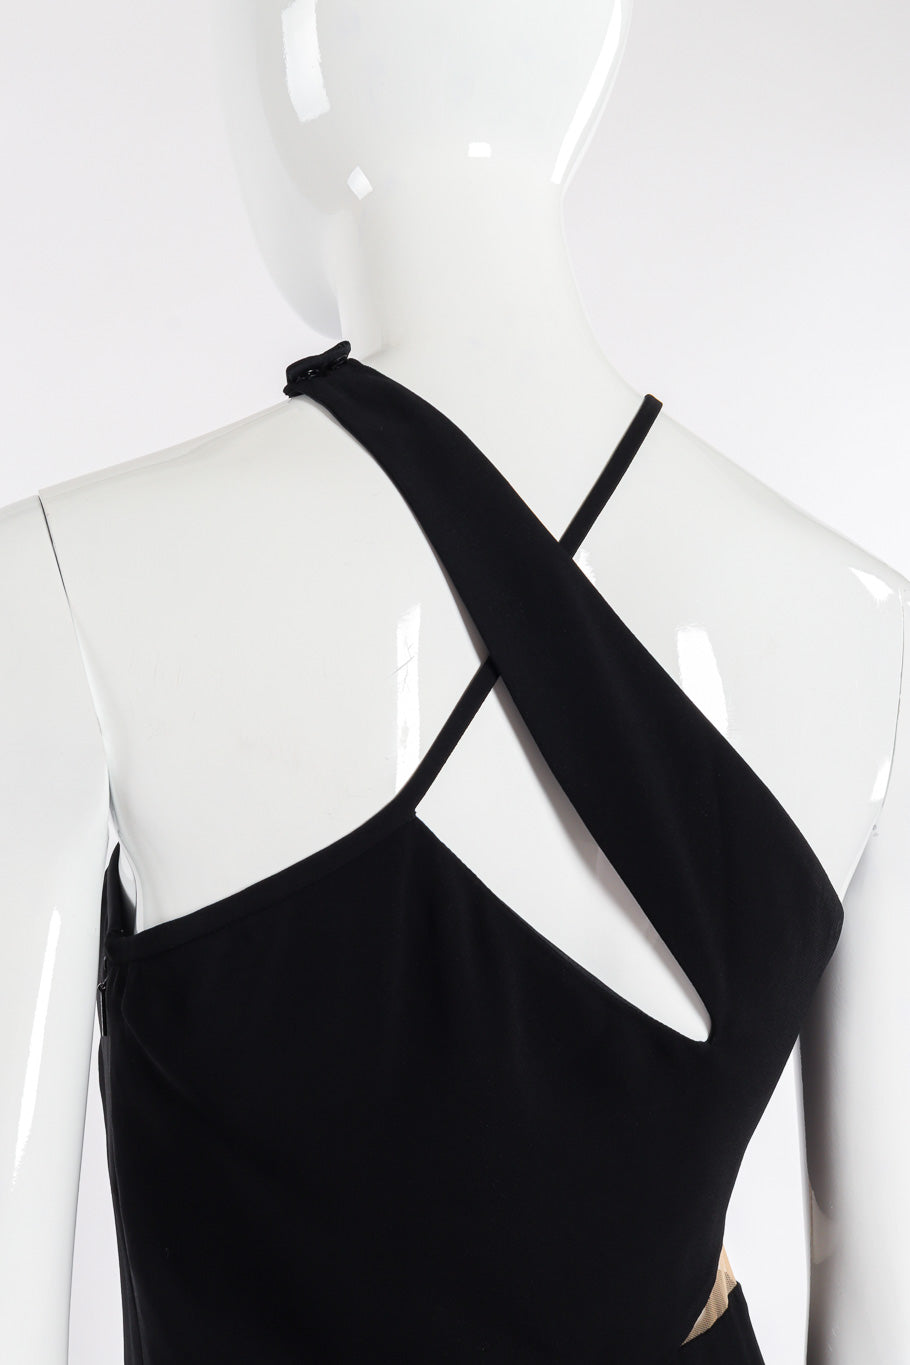 Versace Asymmetric Cut-Out Dress crossover straps back view closeup @Recessla